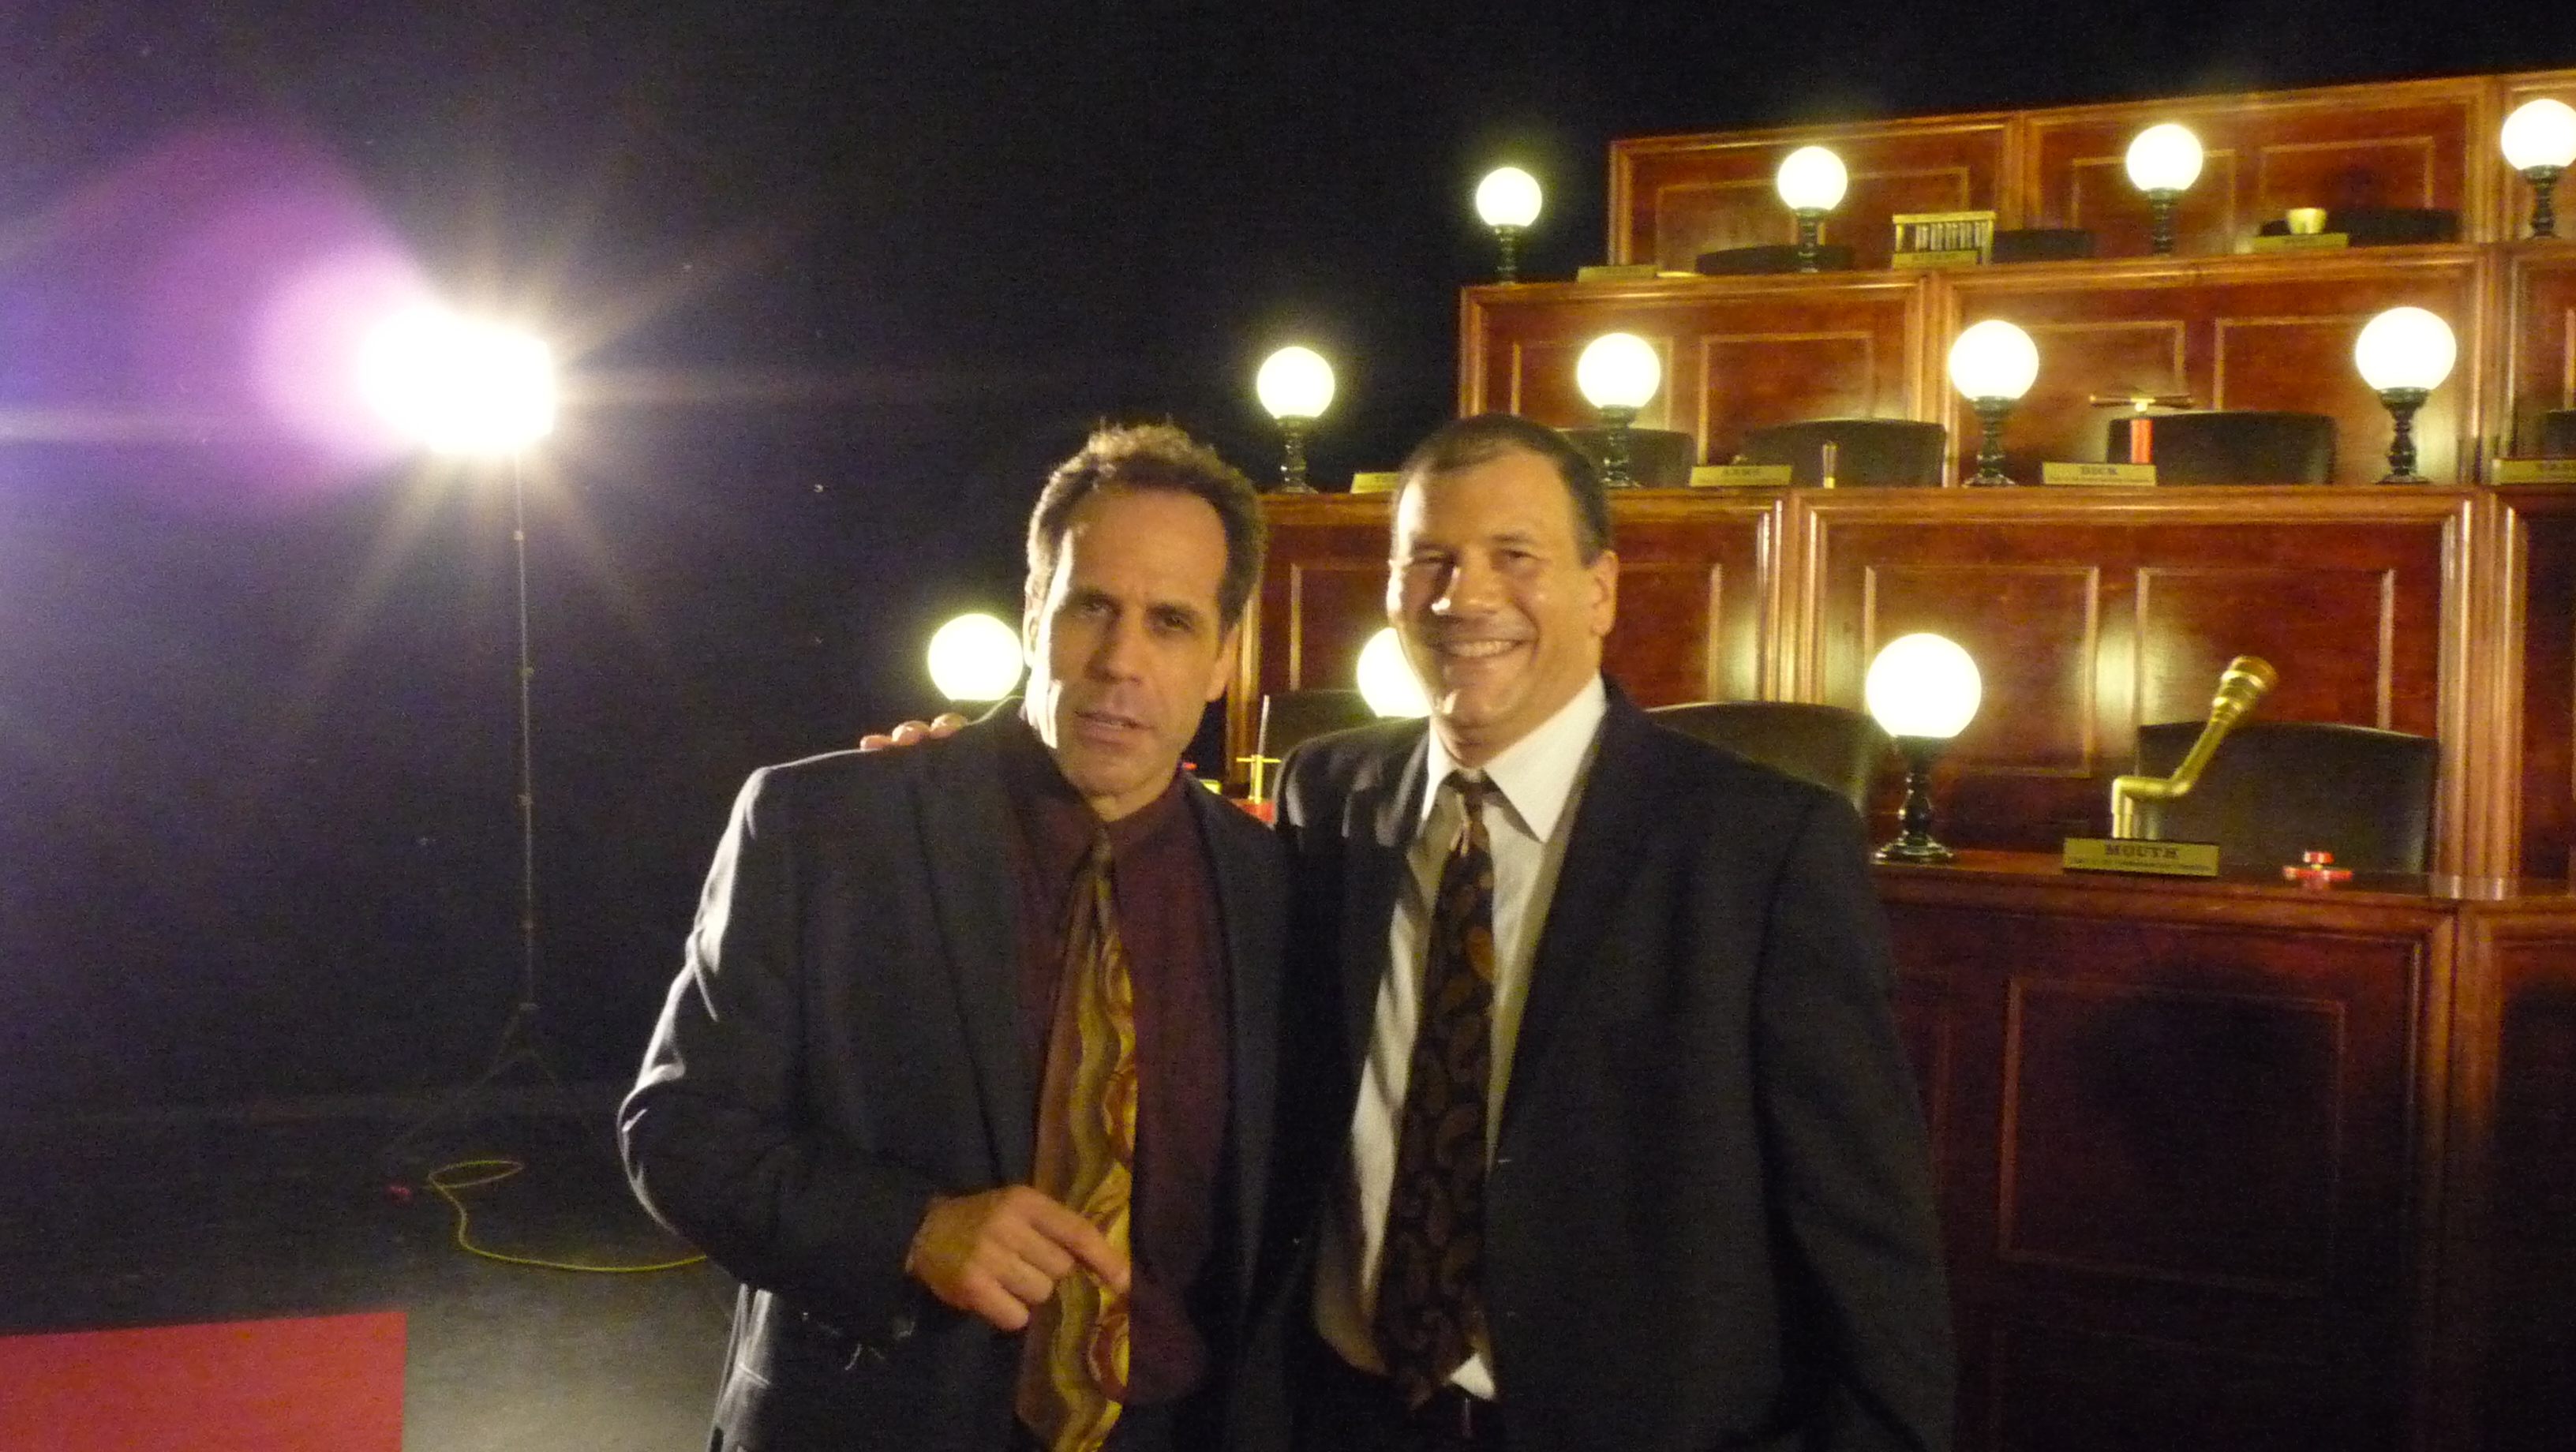 on set, June 2011: John E Seymore and Saul Stein